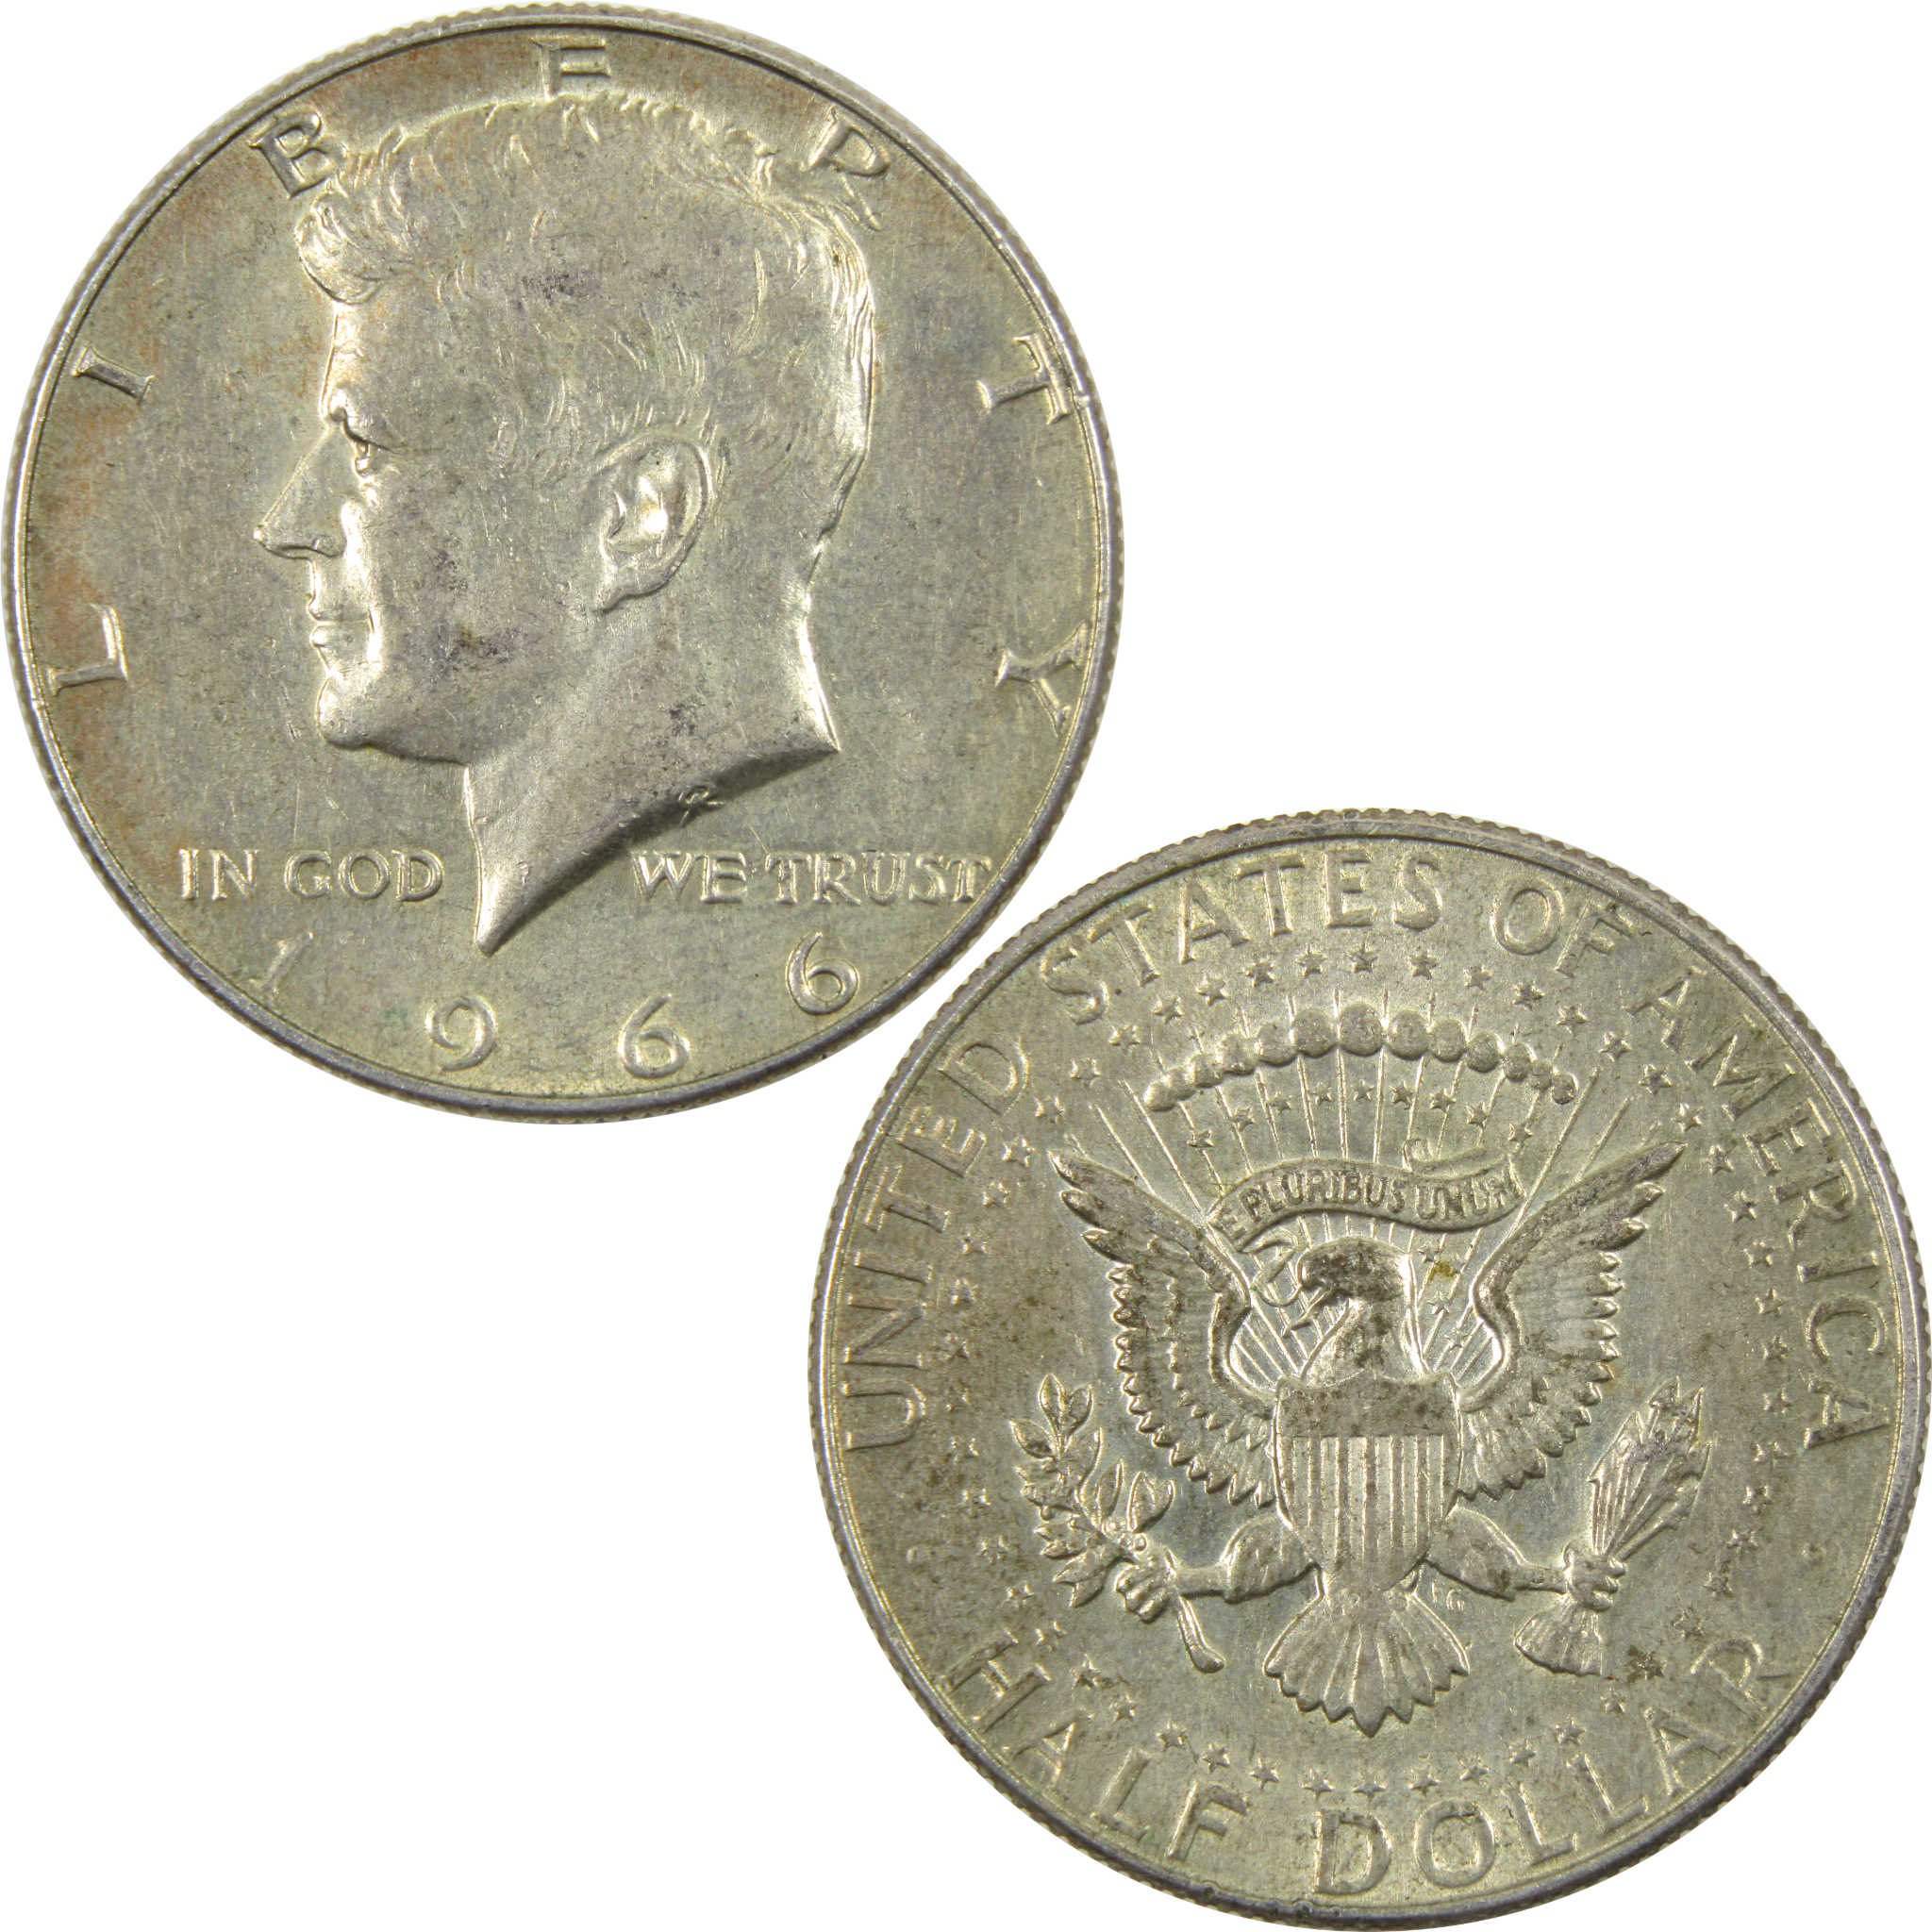 1966 Kennedy Half Dollar AG About Good 40% Silver Clad 50c Coin